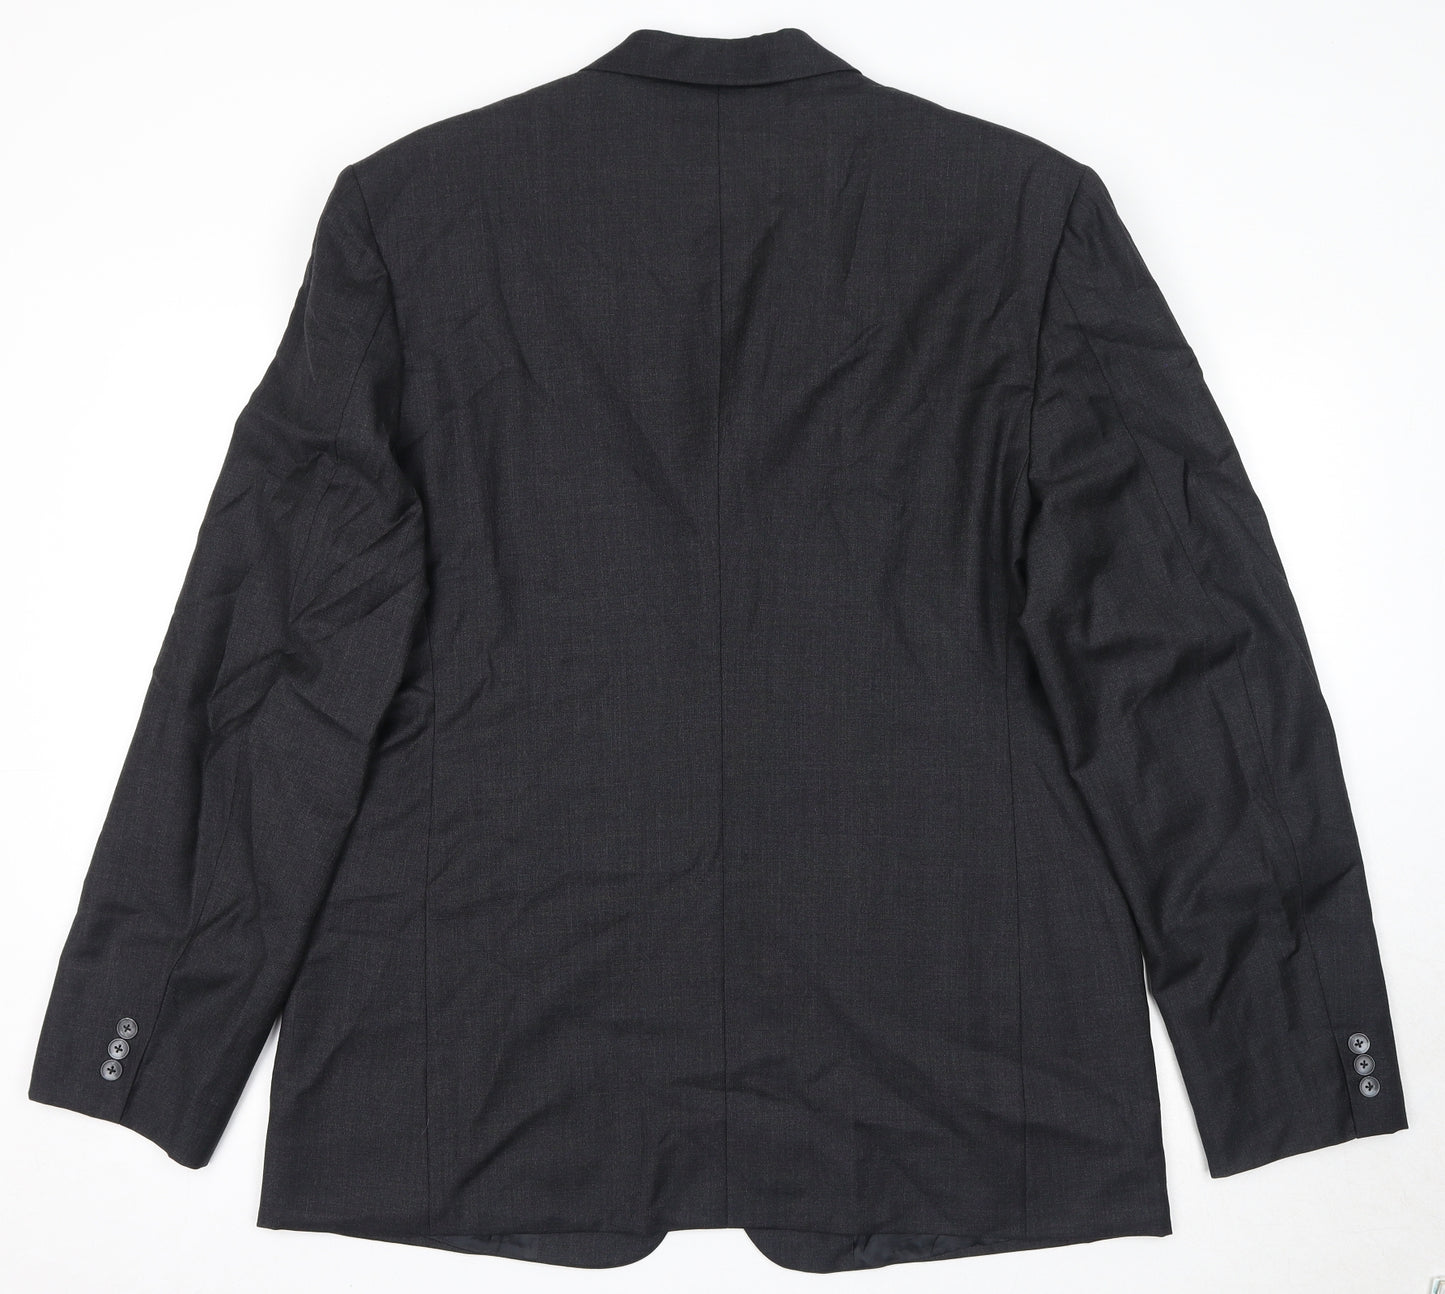 Pierre Cardin Mens Grey Polyester Jacket Suit Jacket Size 46 Regular